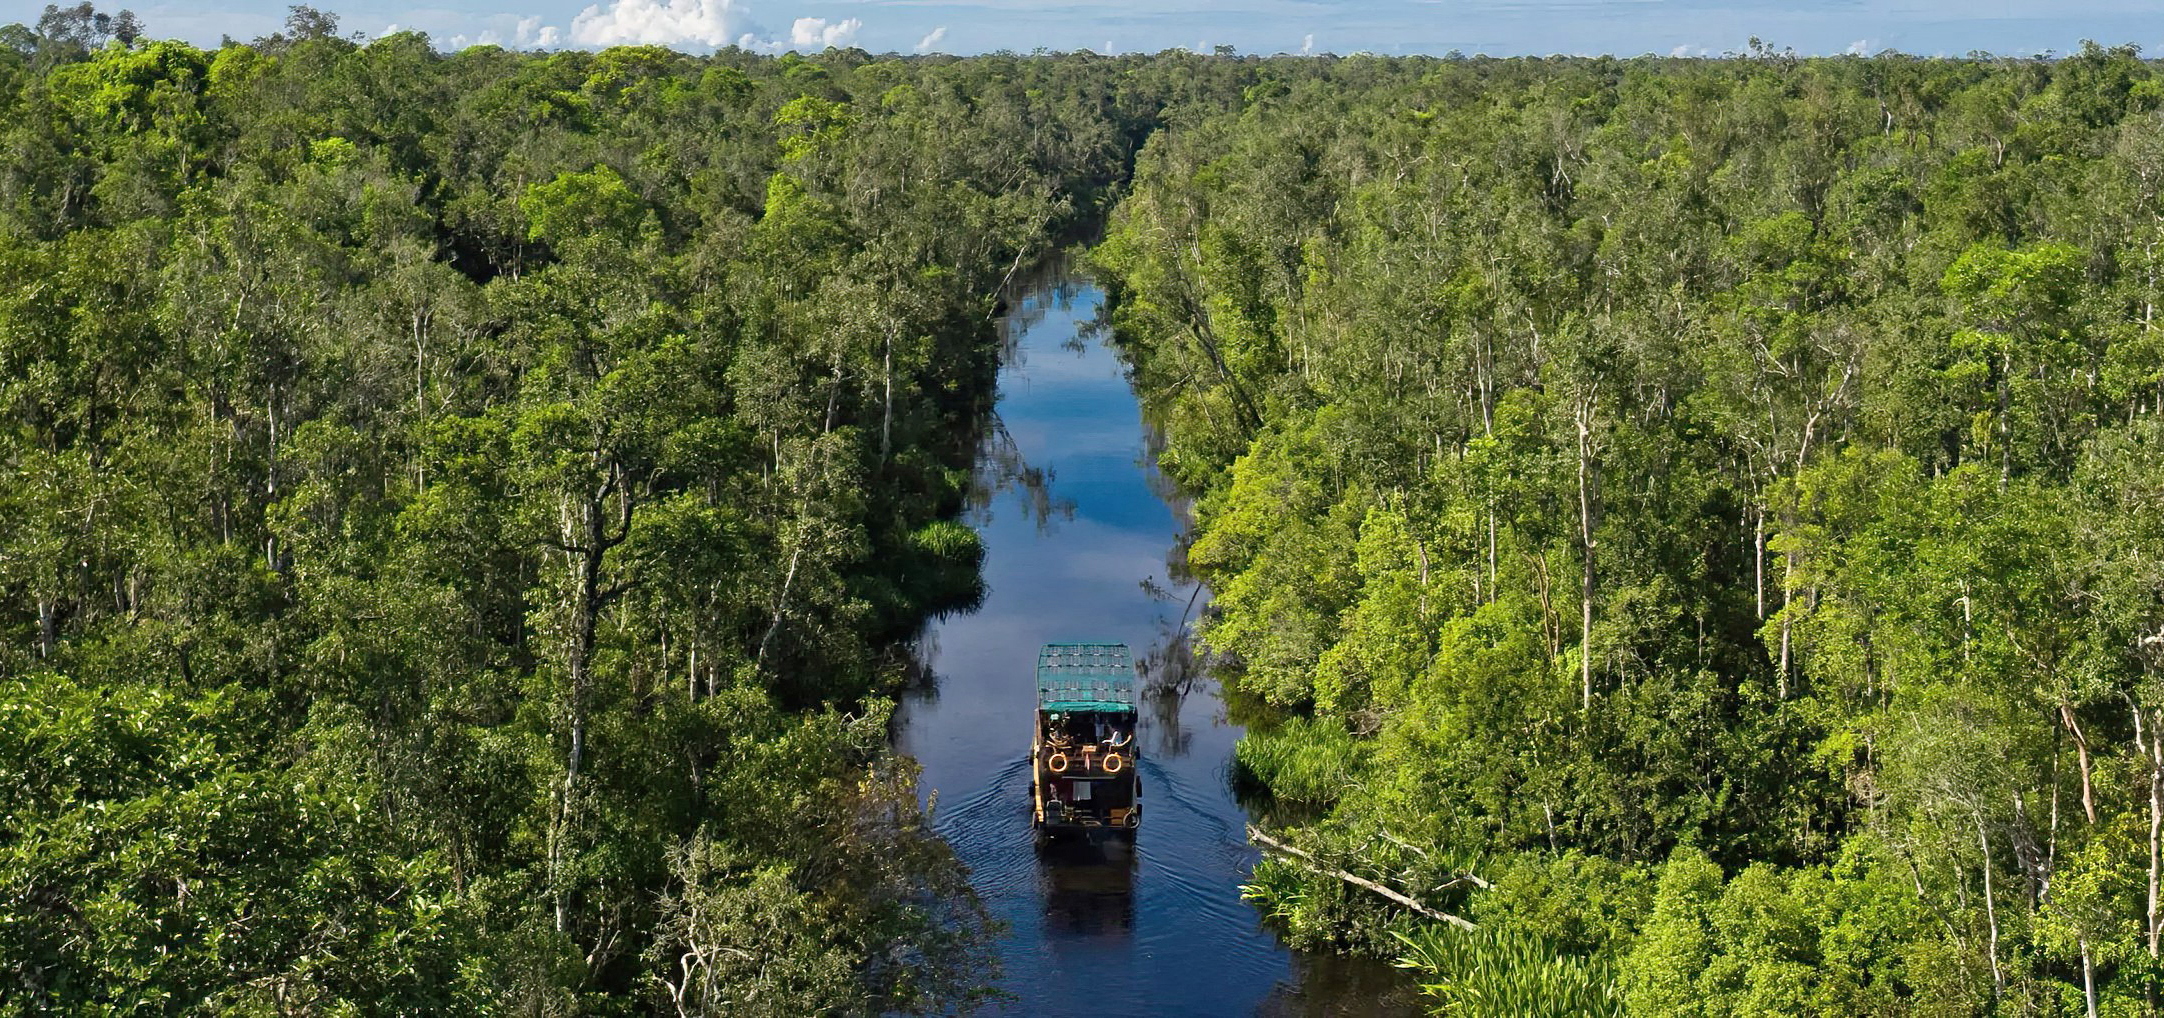 Borneo Orangutan Rainforest River Cruise